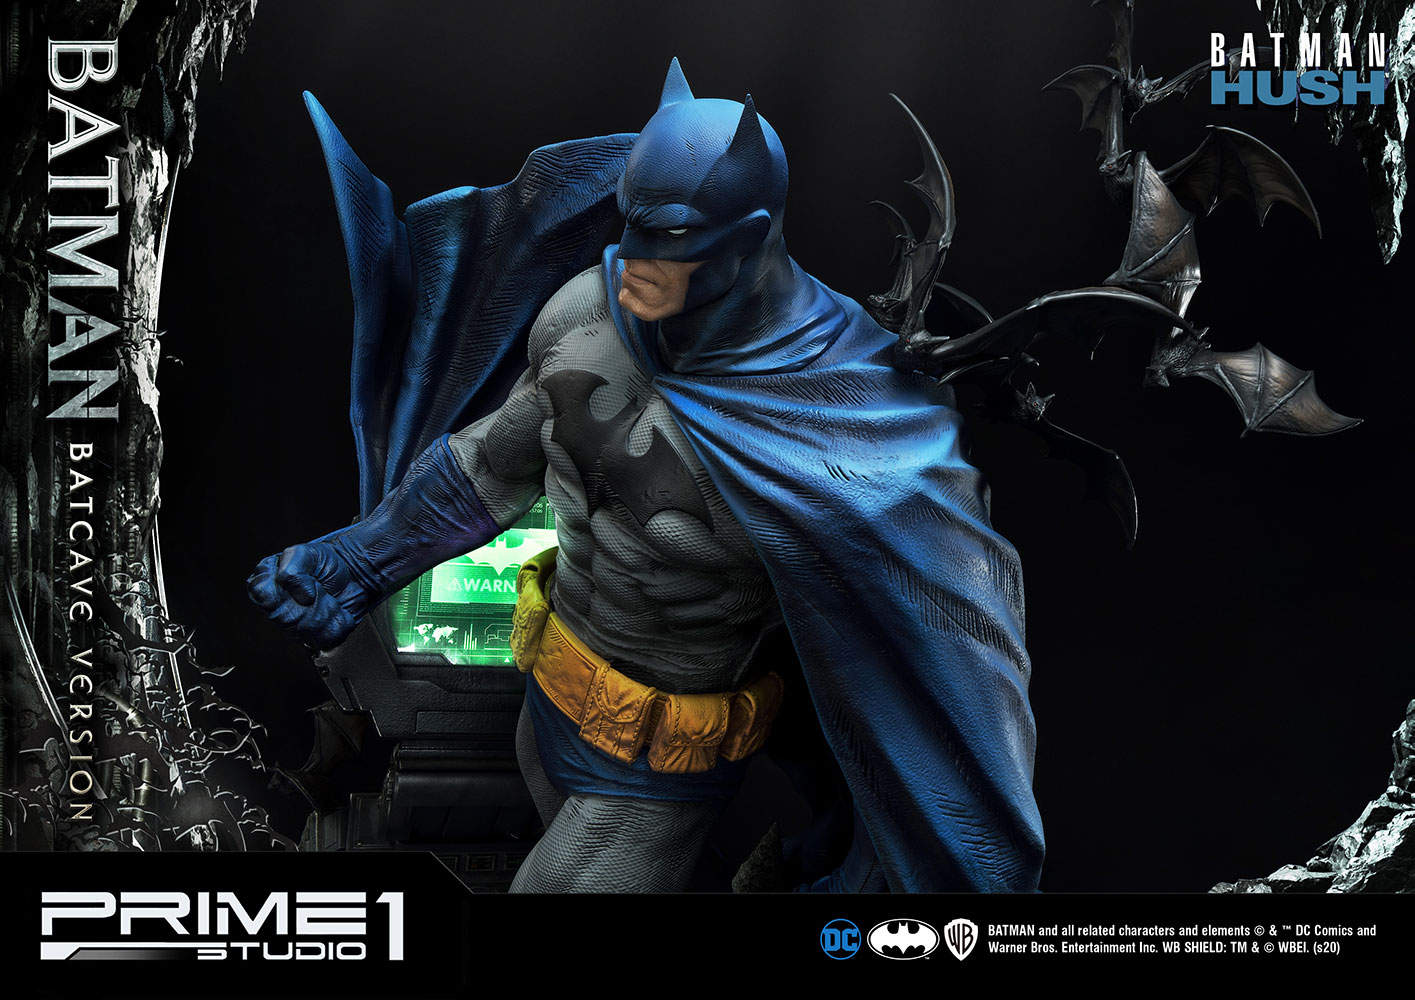 Batman Batcave Version Collector Edition (Prototype Shown) View 23